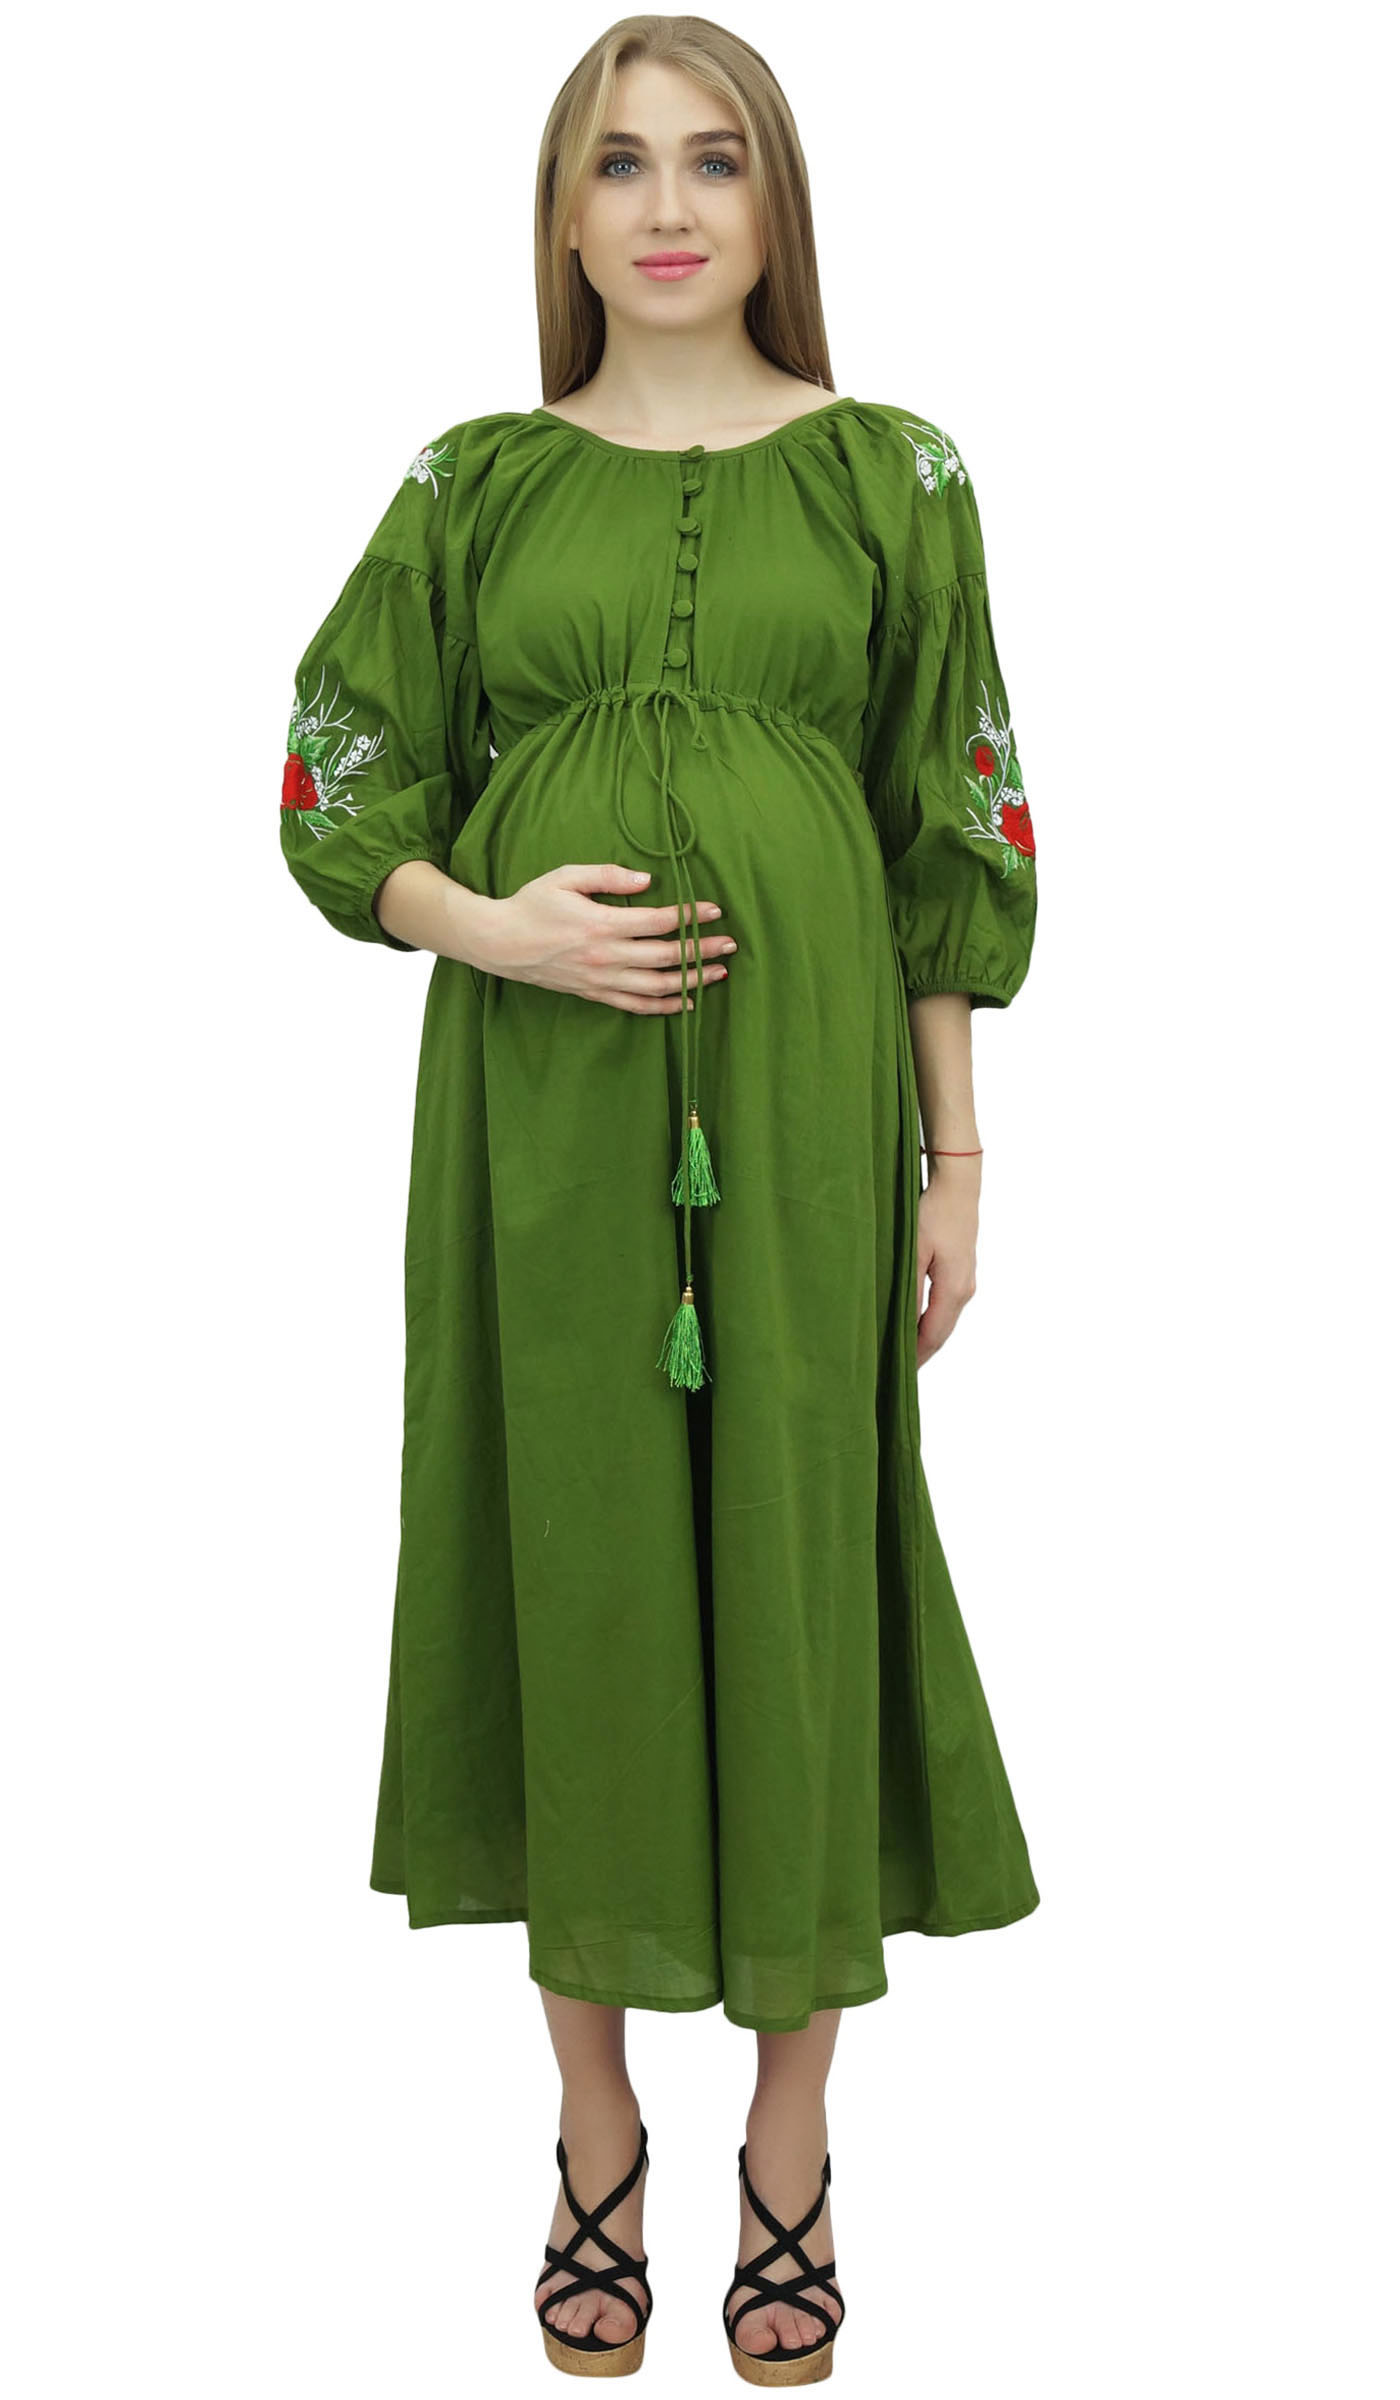 Bimba Moms Embroidered Women's Olive Green Maternity Dress GownjB3 eBay